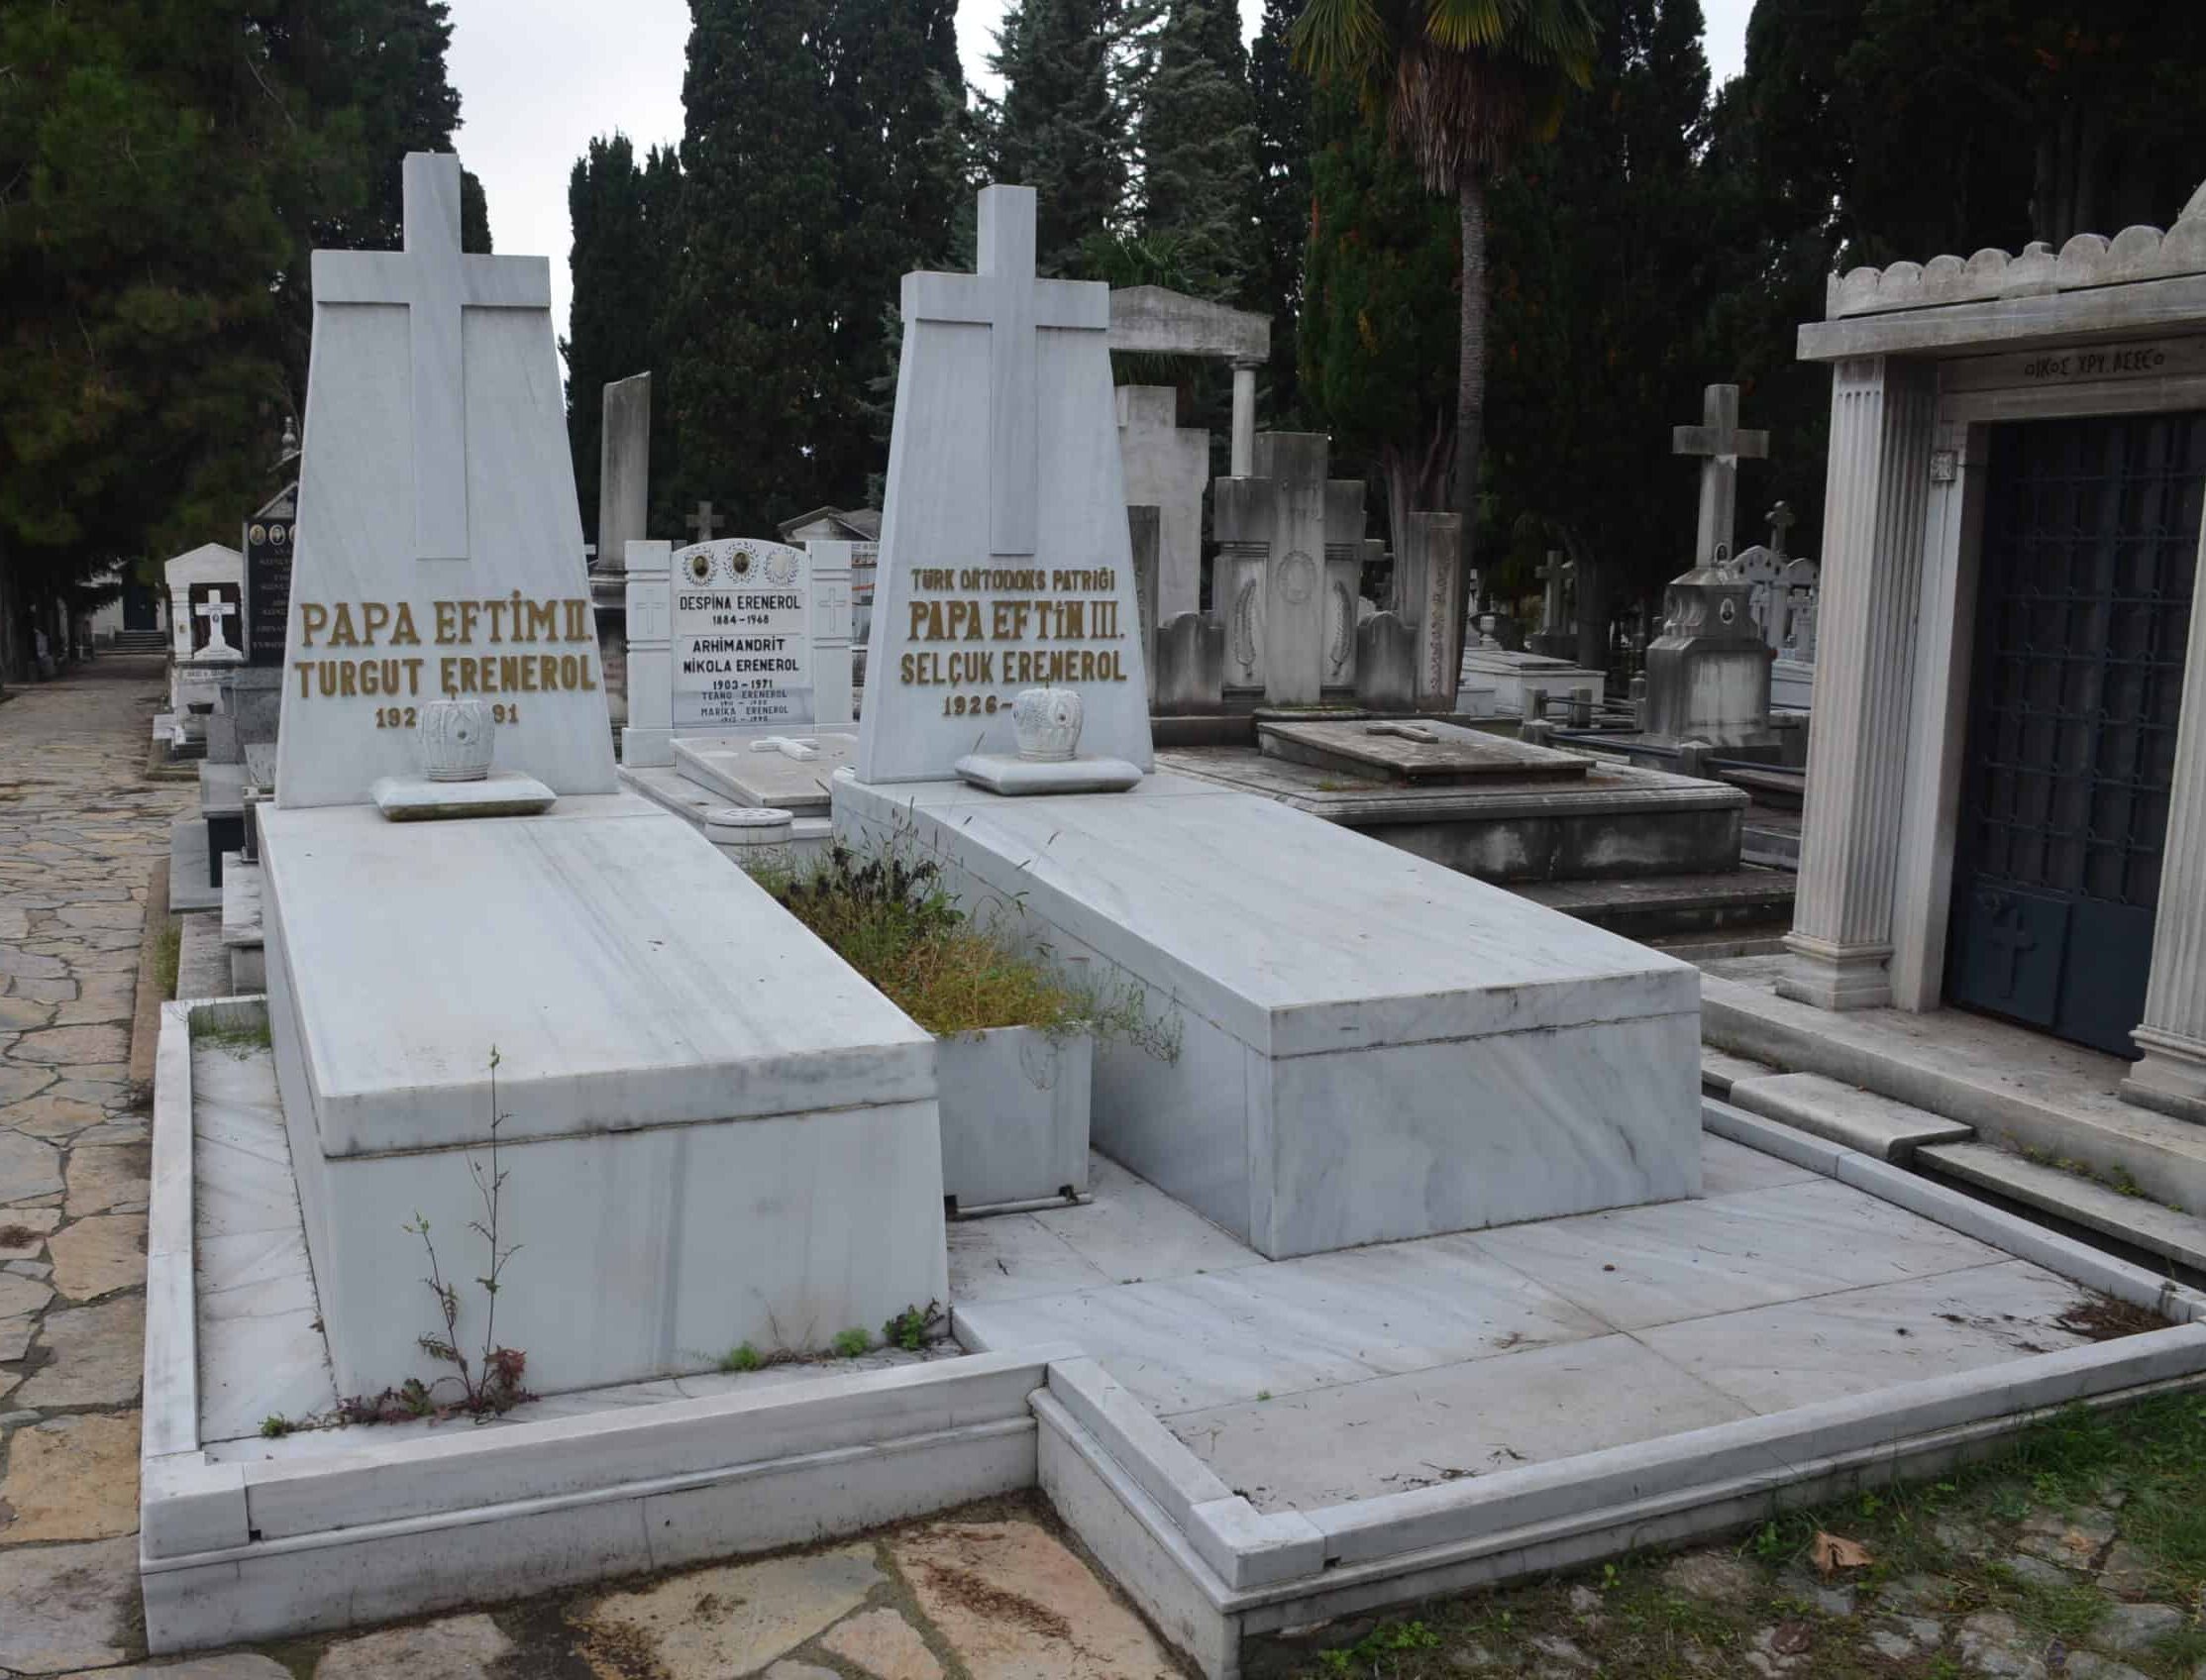 Tombs of Papa Eftim II (left) and Papa Eftim III (right) at the Greek Orthodox Cemetery in Şişli, Istanbul, Turkey